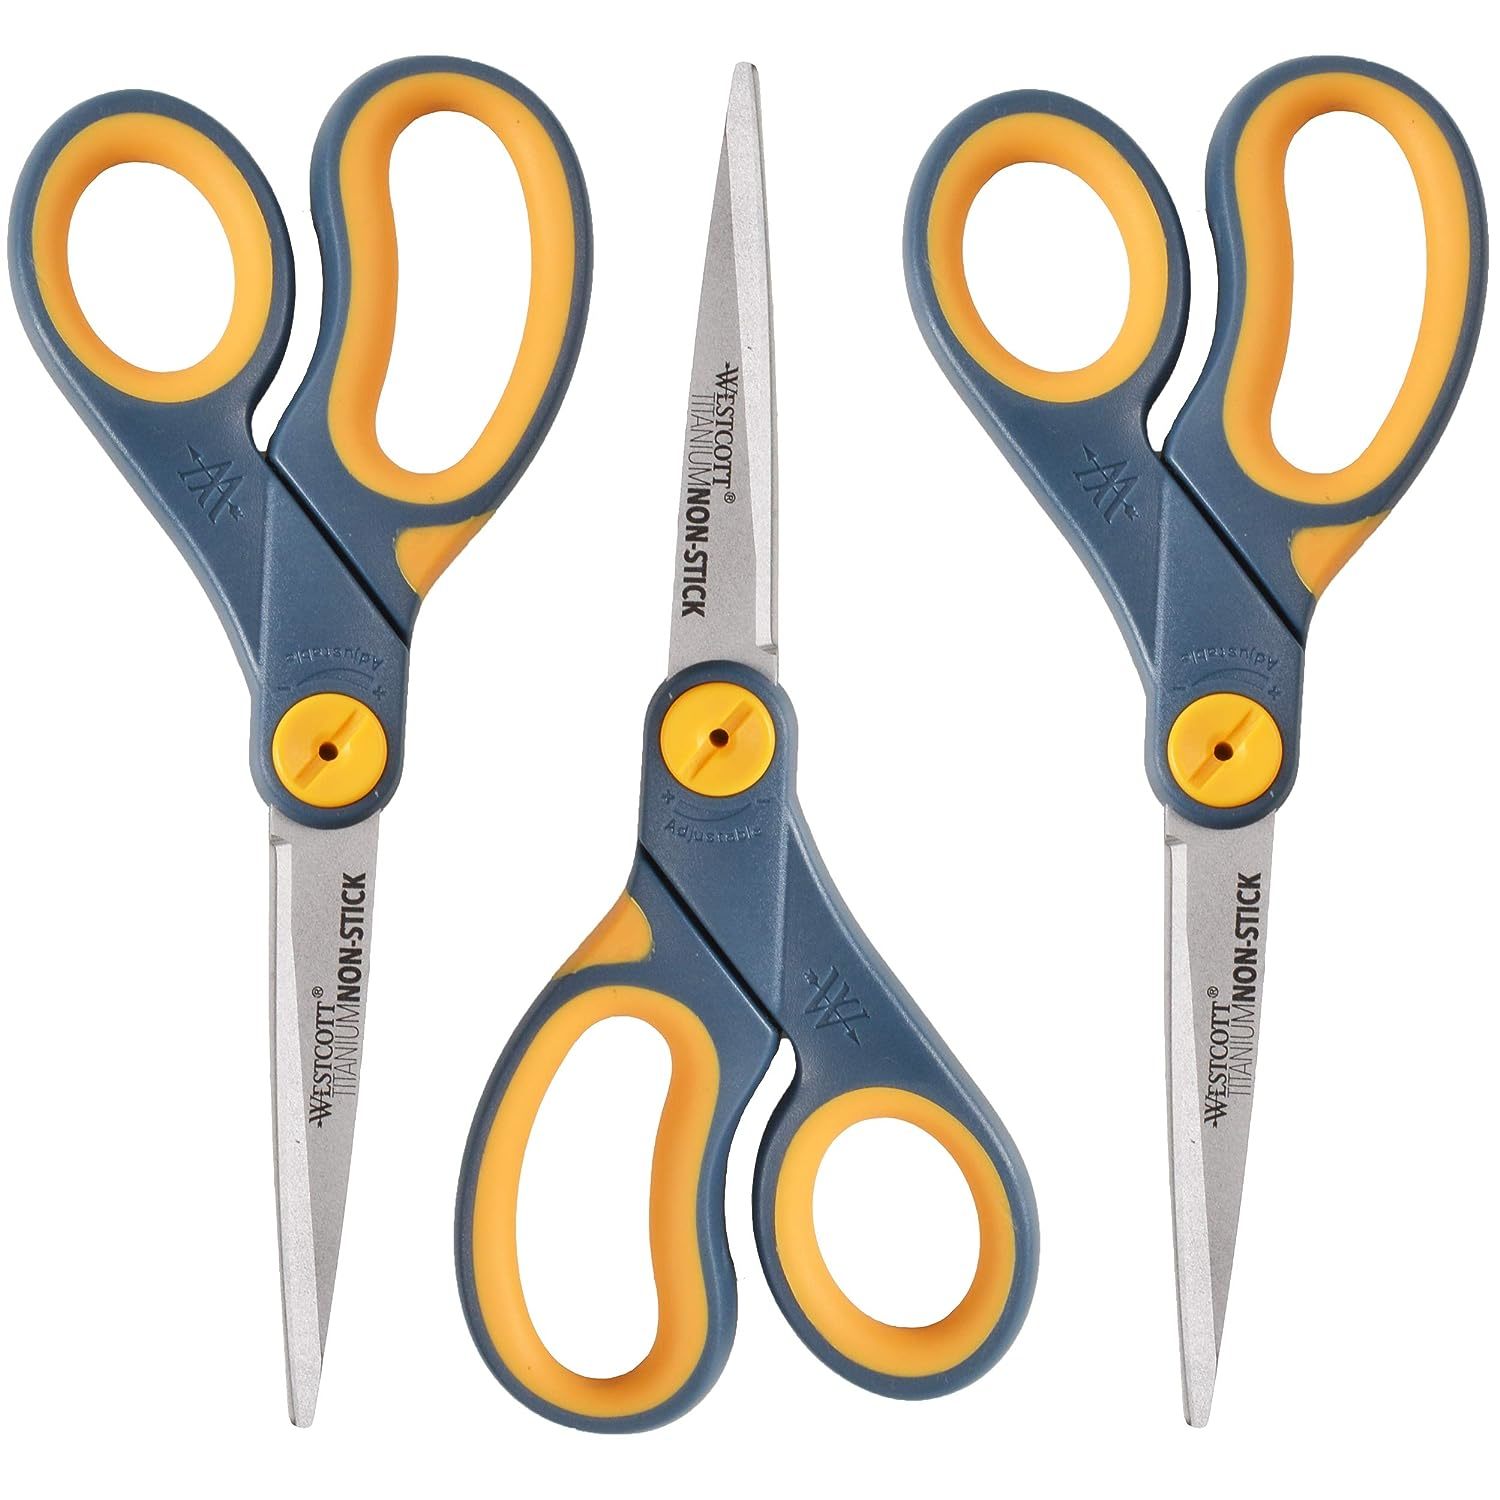 Westcott Non-Stick Titanium Bonded Scissors, 8 Long, 3.25 Cut Length, Gray/Yellow Straight Handles, 3/Pack